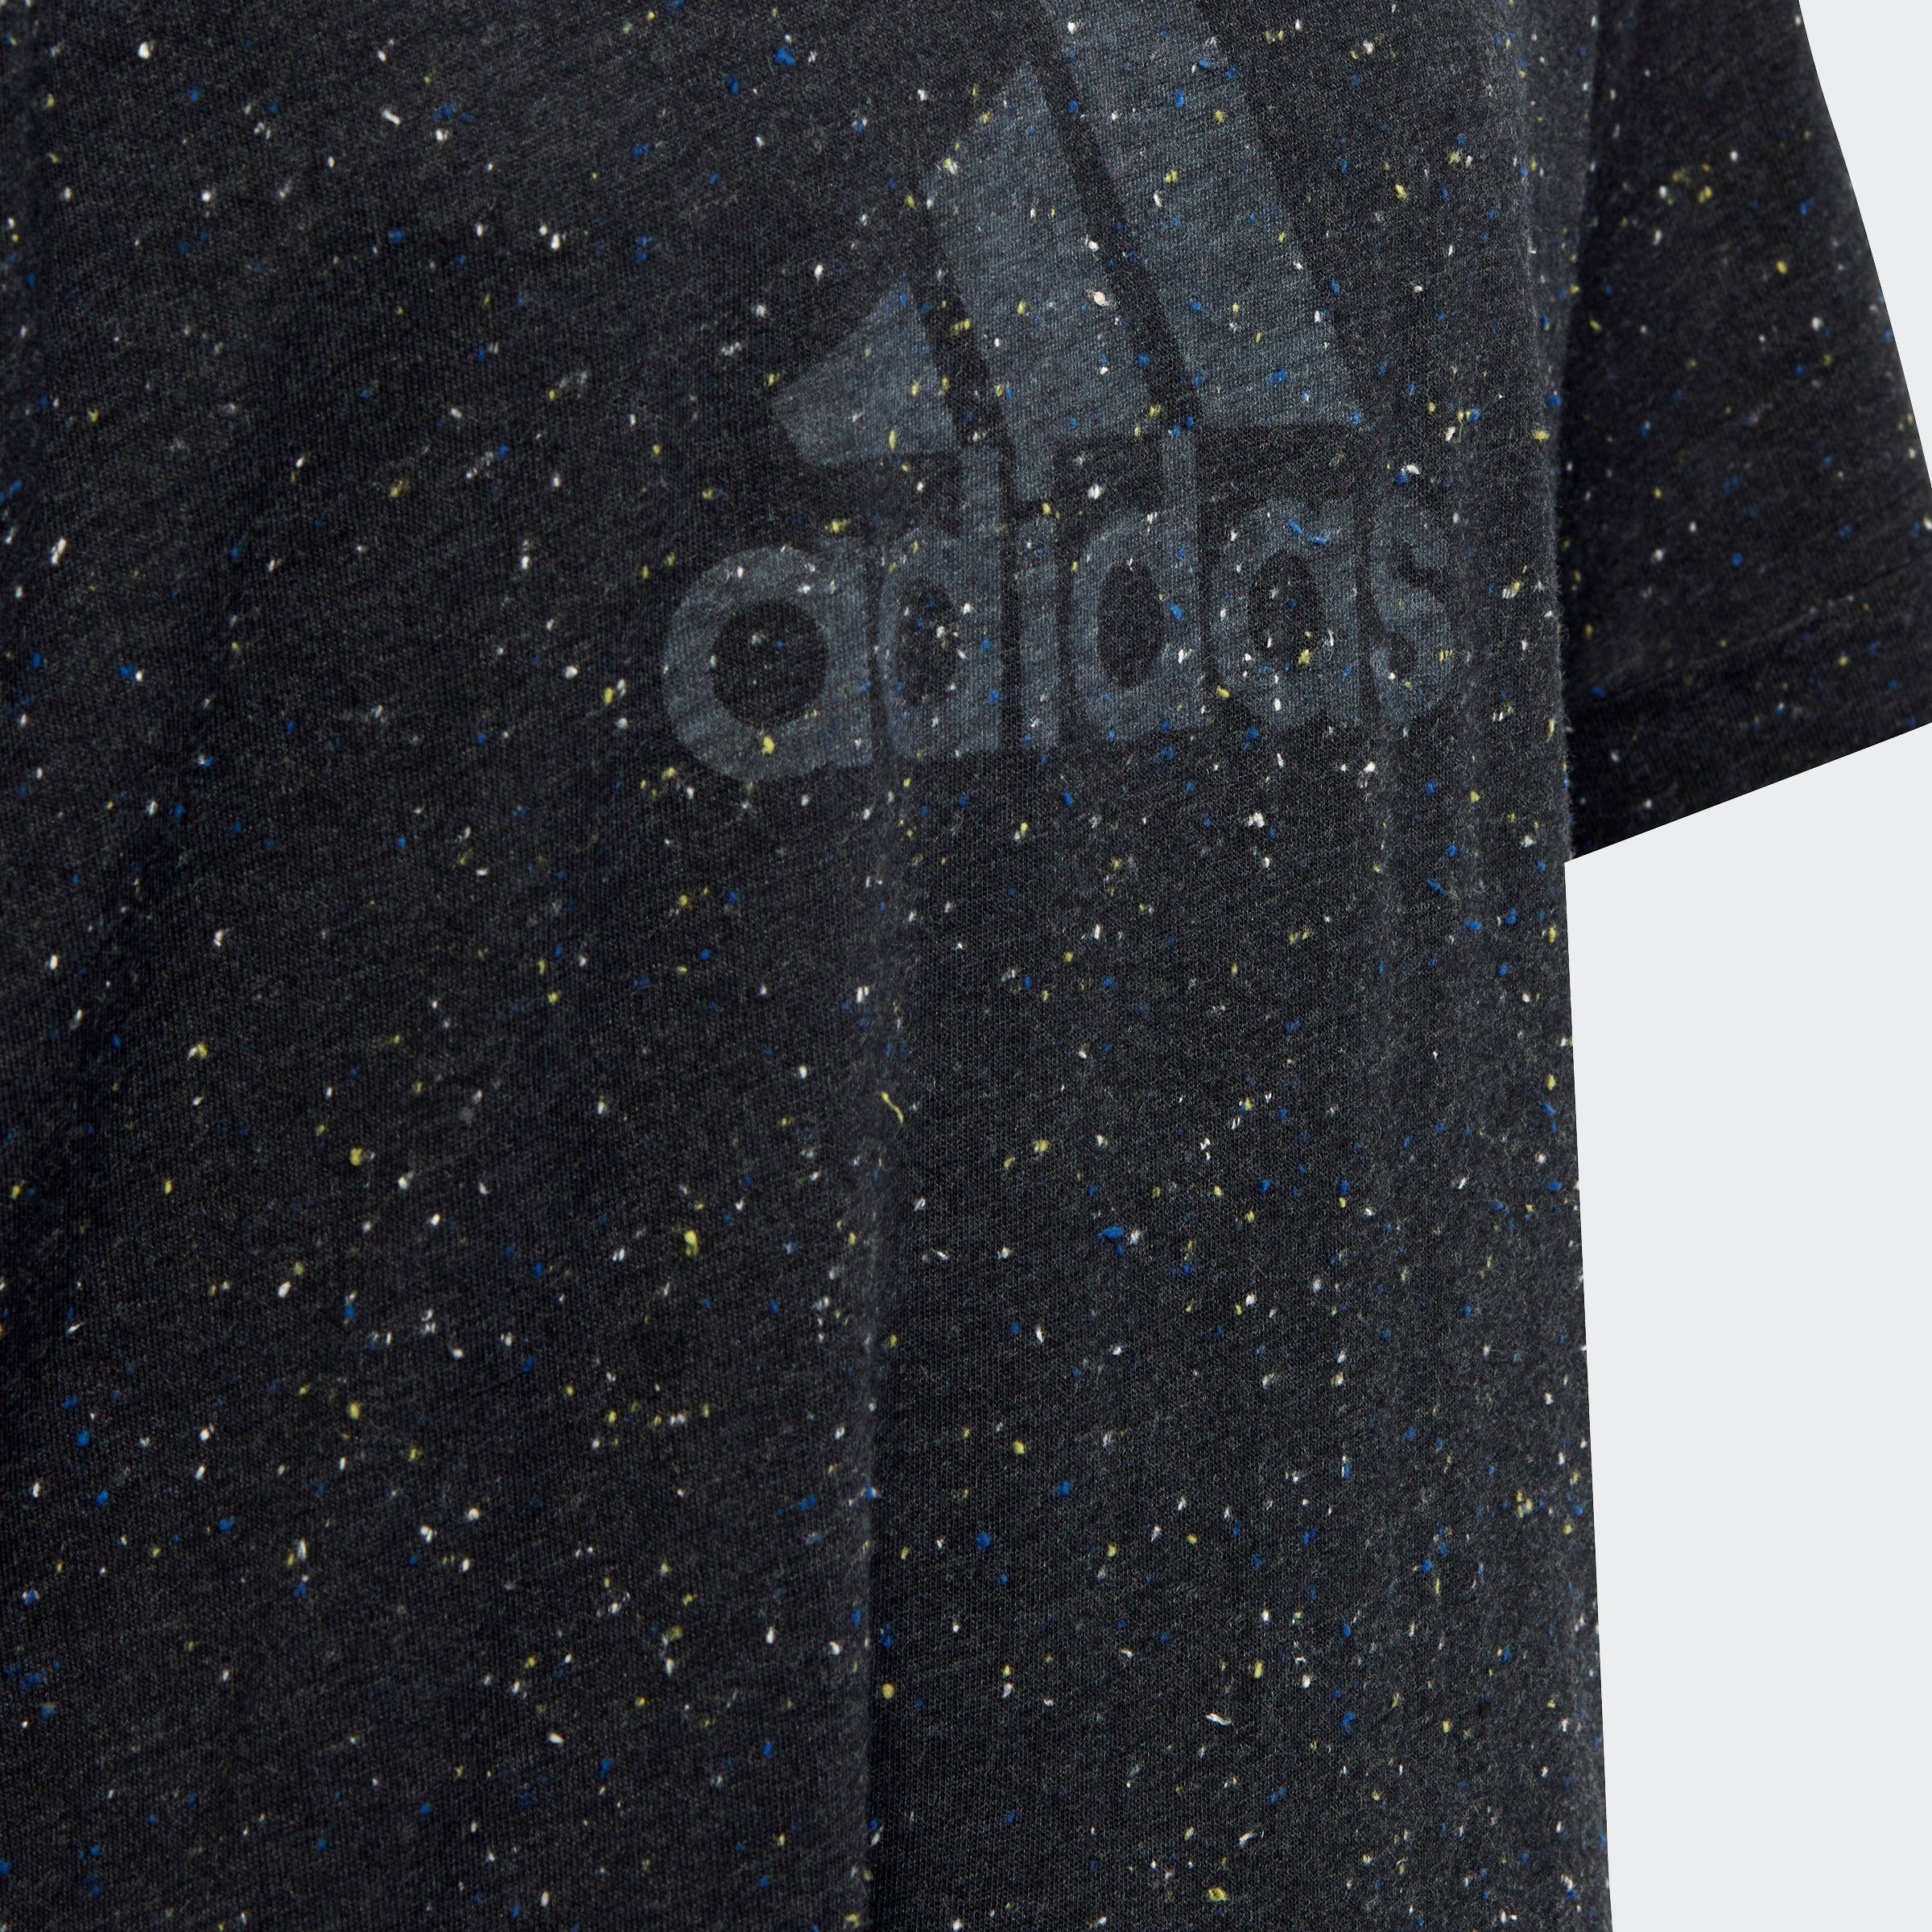 Melange WINNERS FUTURE White Black / T-Shirt ICONS adidas Sportswear